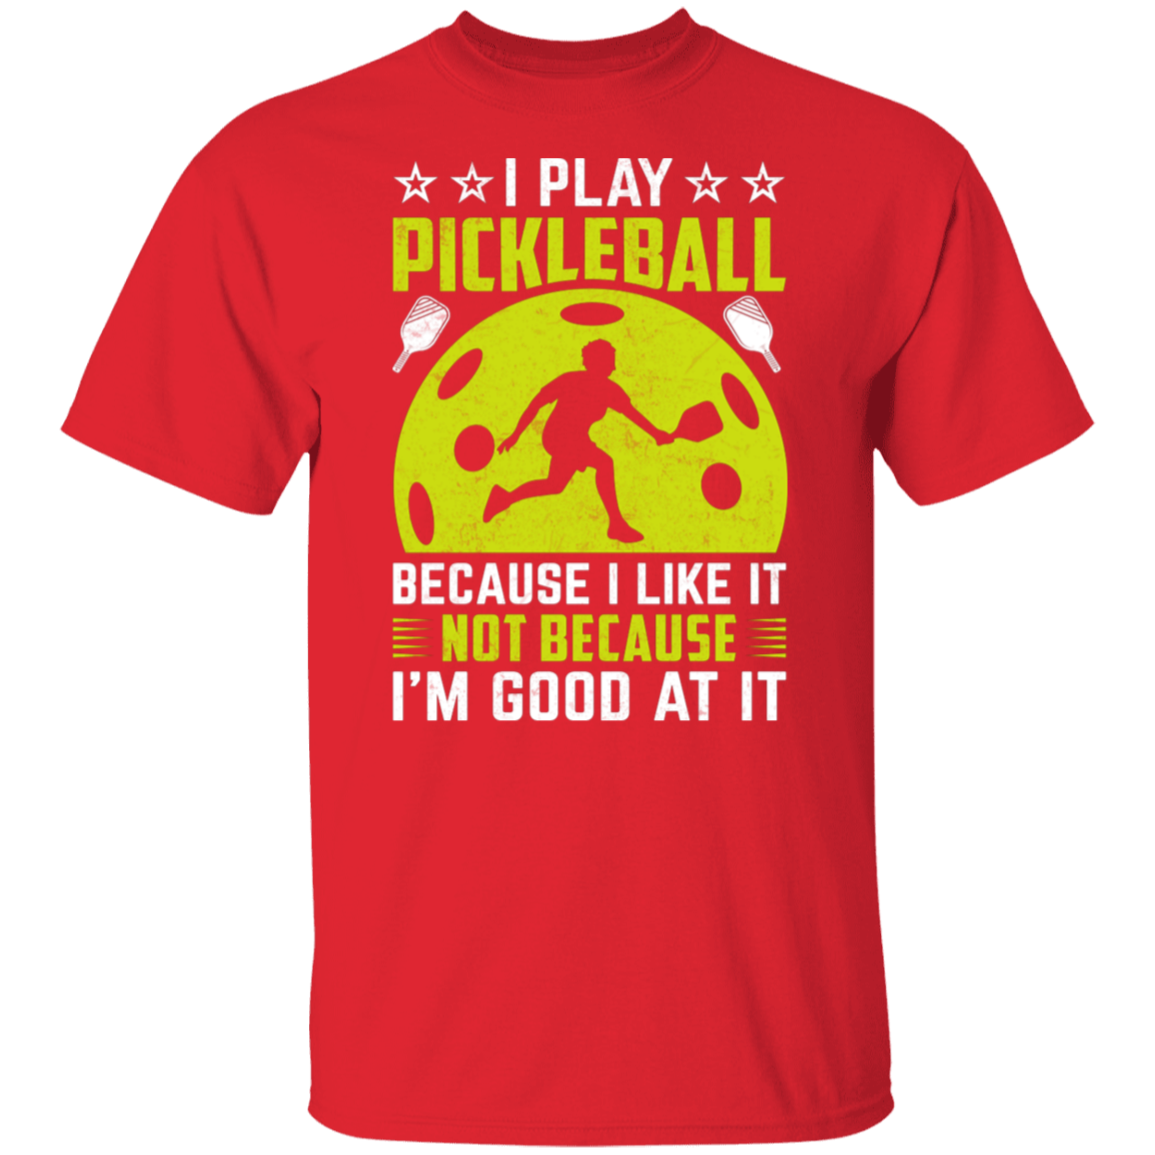 PICKLEBALL PLAY